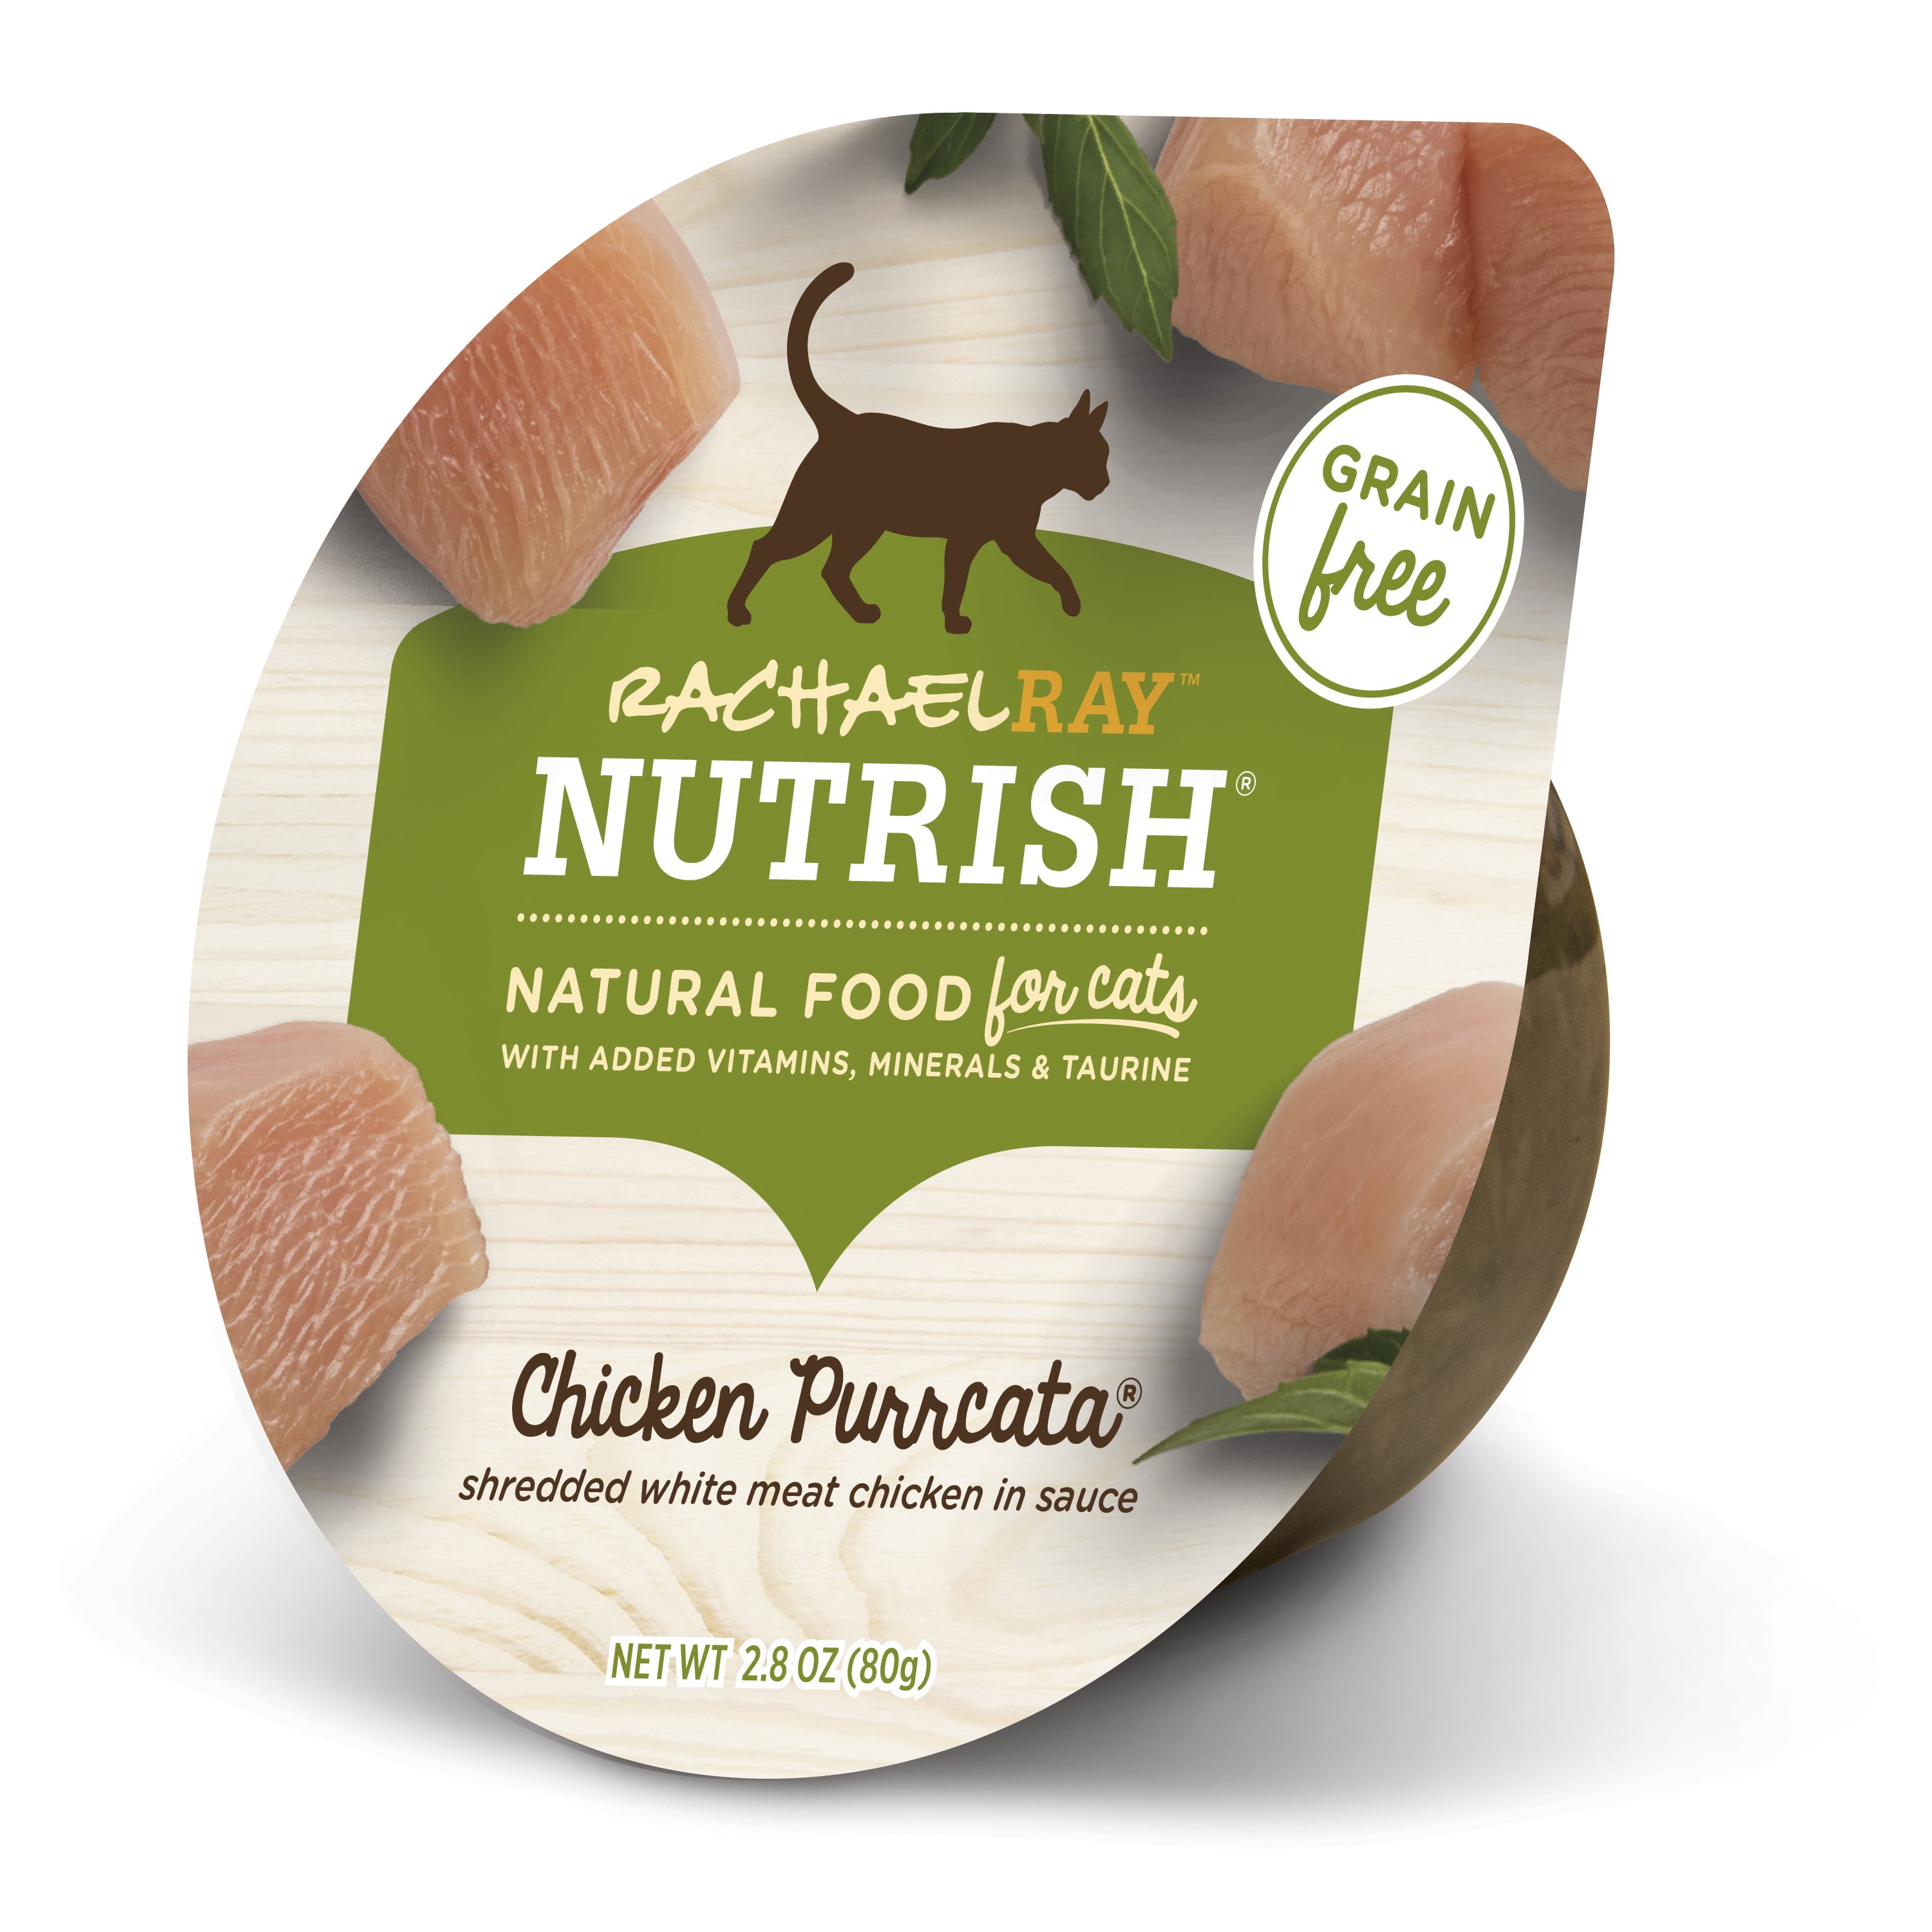 Rachael Ray Nutrish Natural Wet Cat Food, Grain Free, Chicken Purrcata